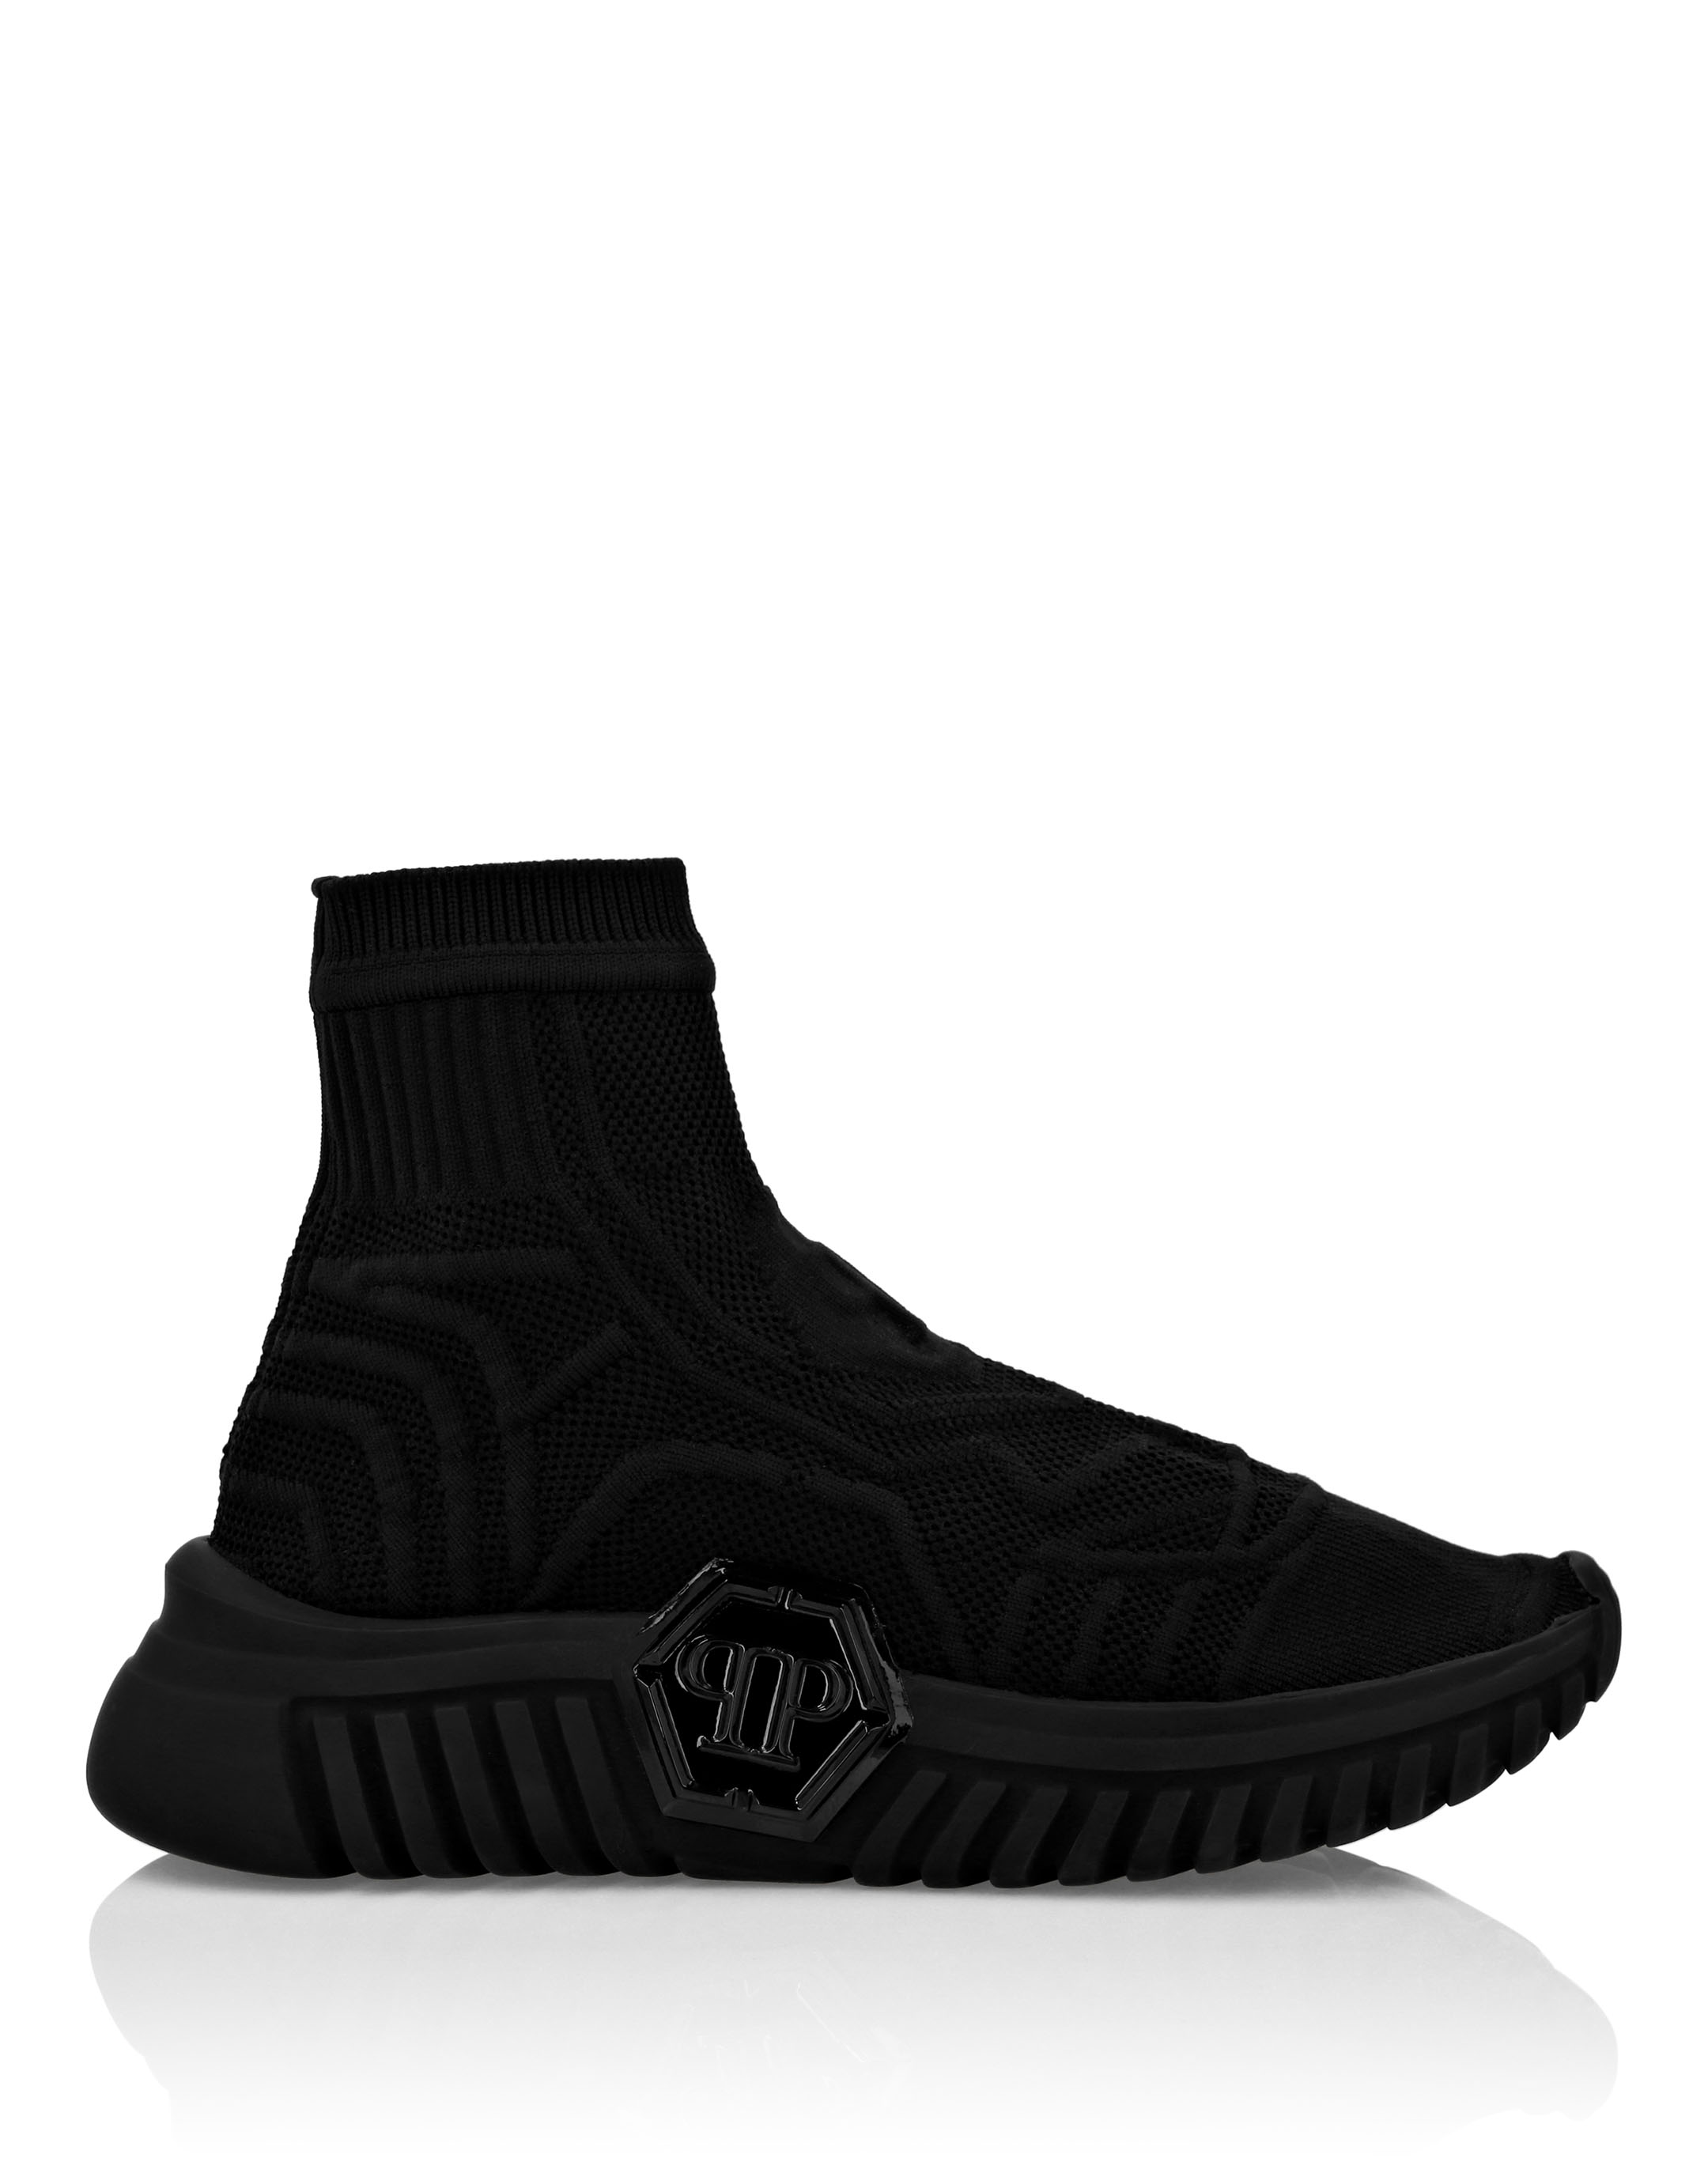 Balenciaga Speed 2.0 Lurex Sock Sneakers | Neiman Marcus